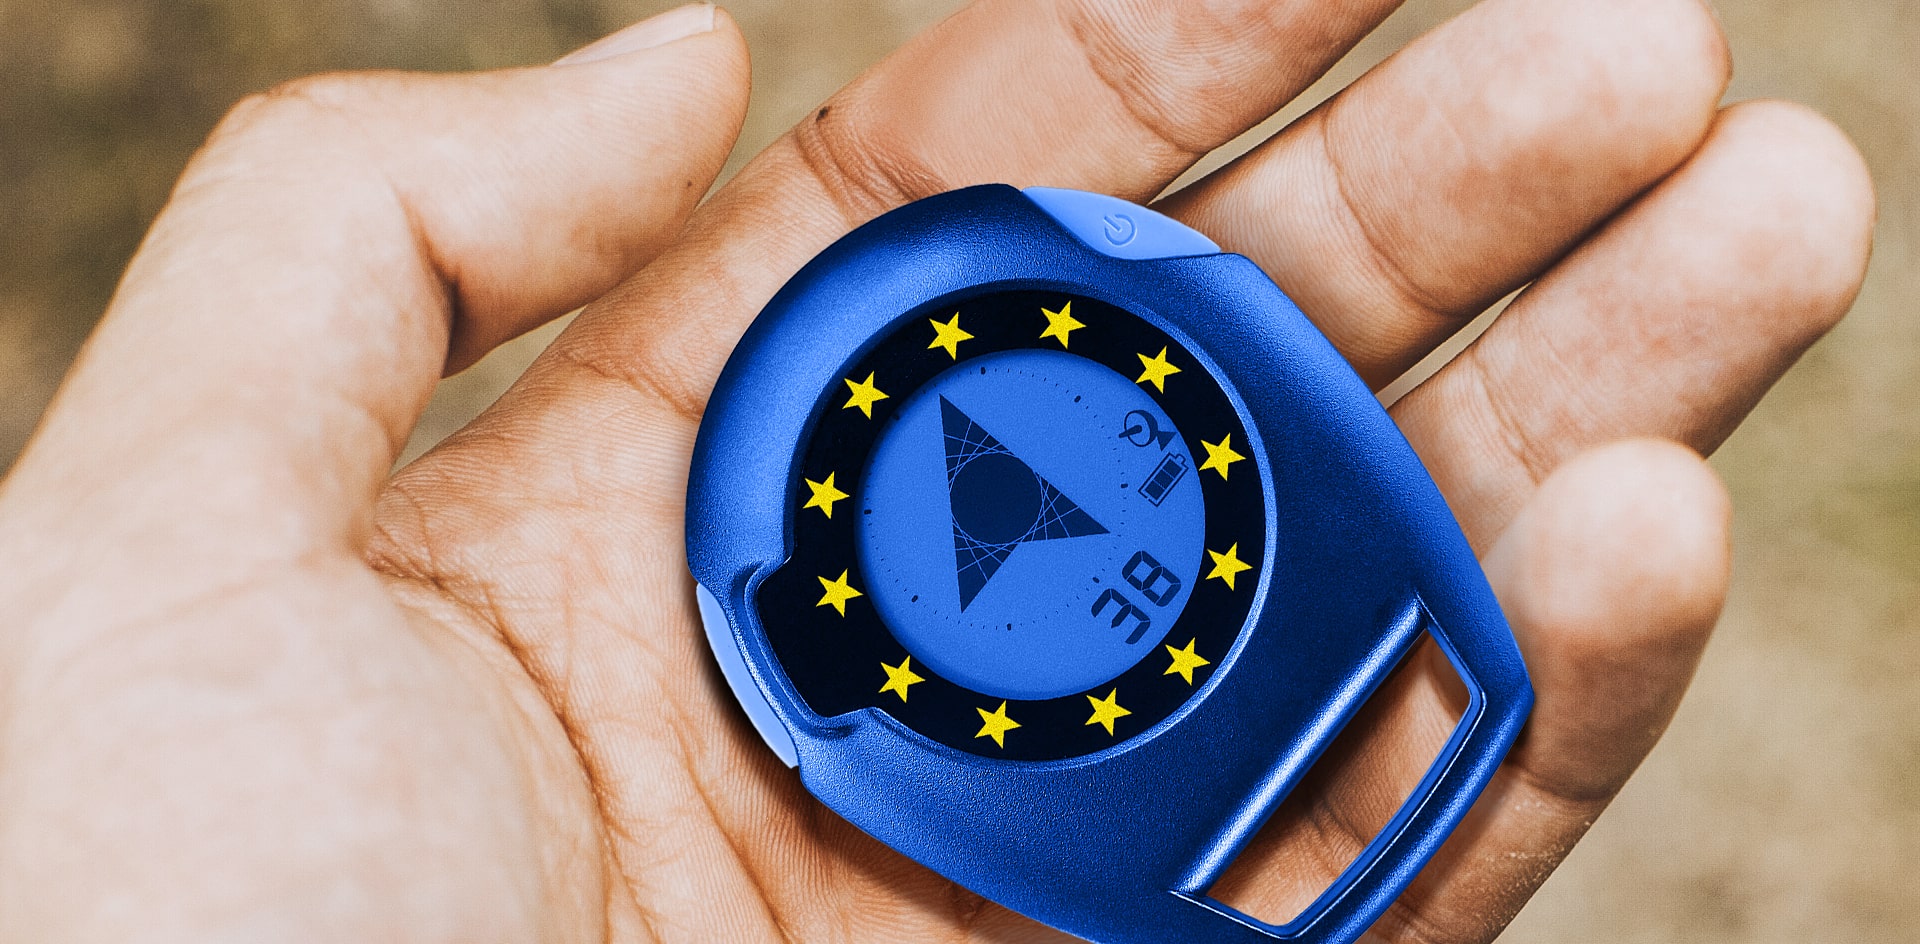 Европа делает ставку на цифровизацию и дистант